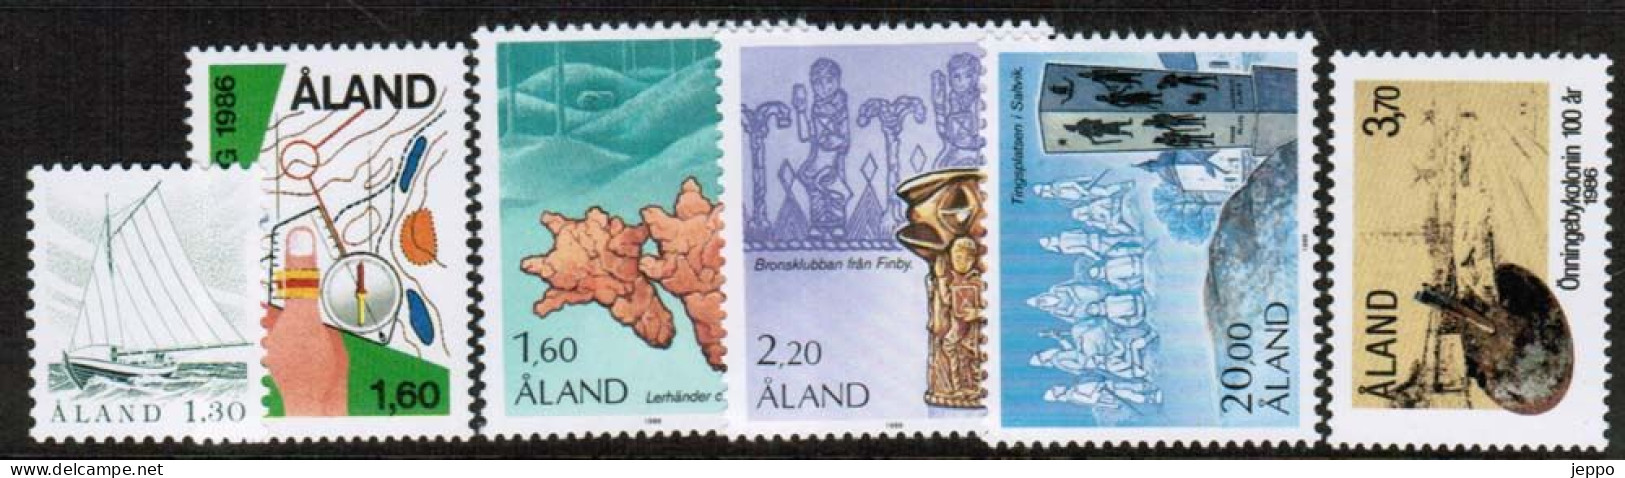 1986 Aland Islands Complete Year Set Mnh. - Aland